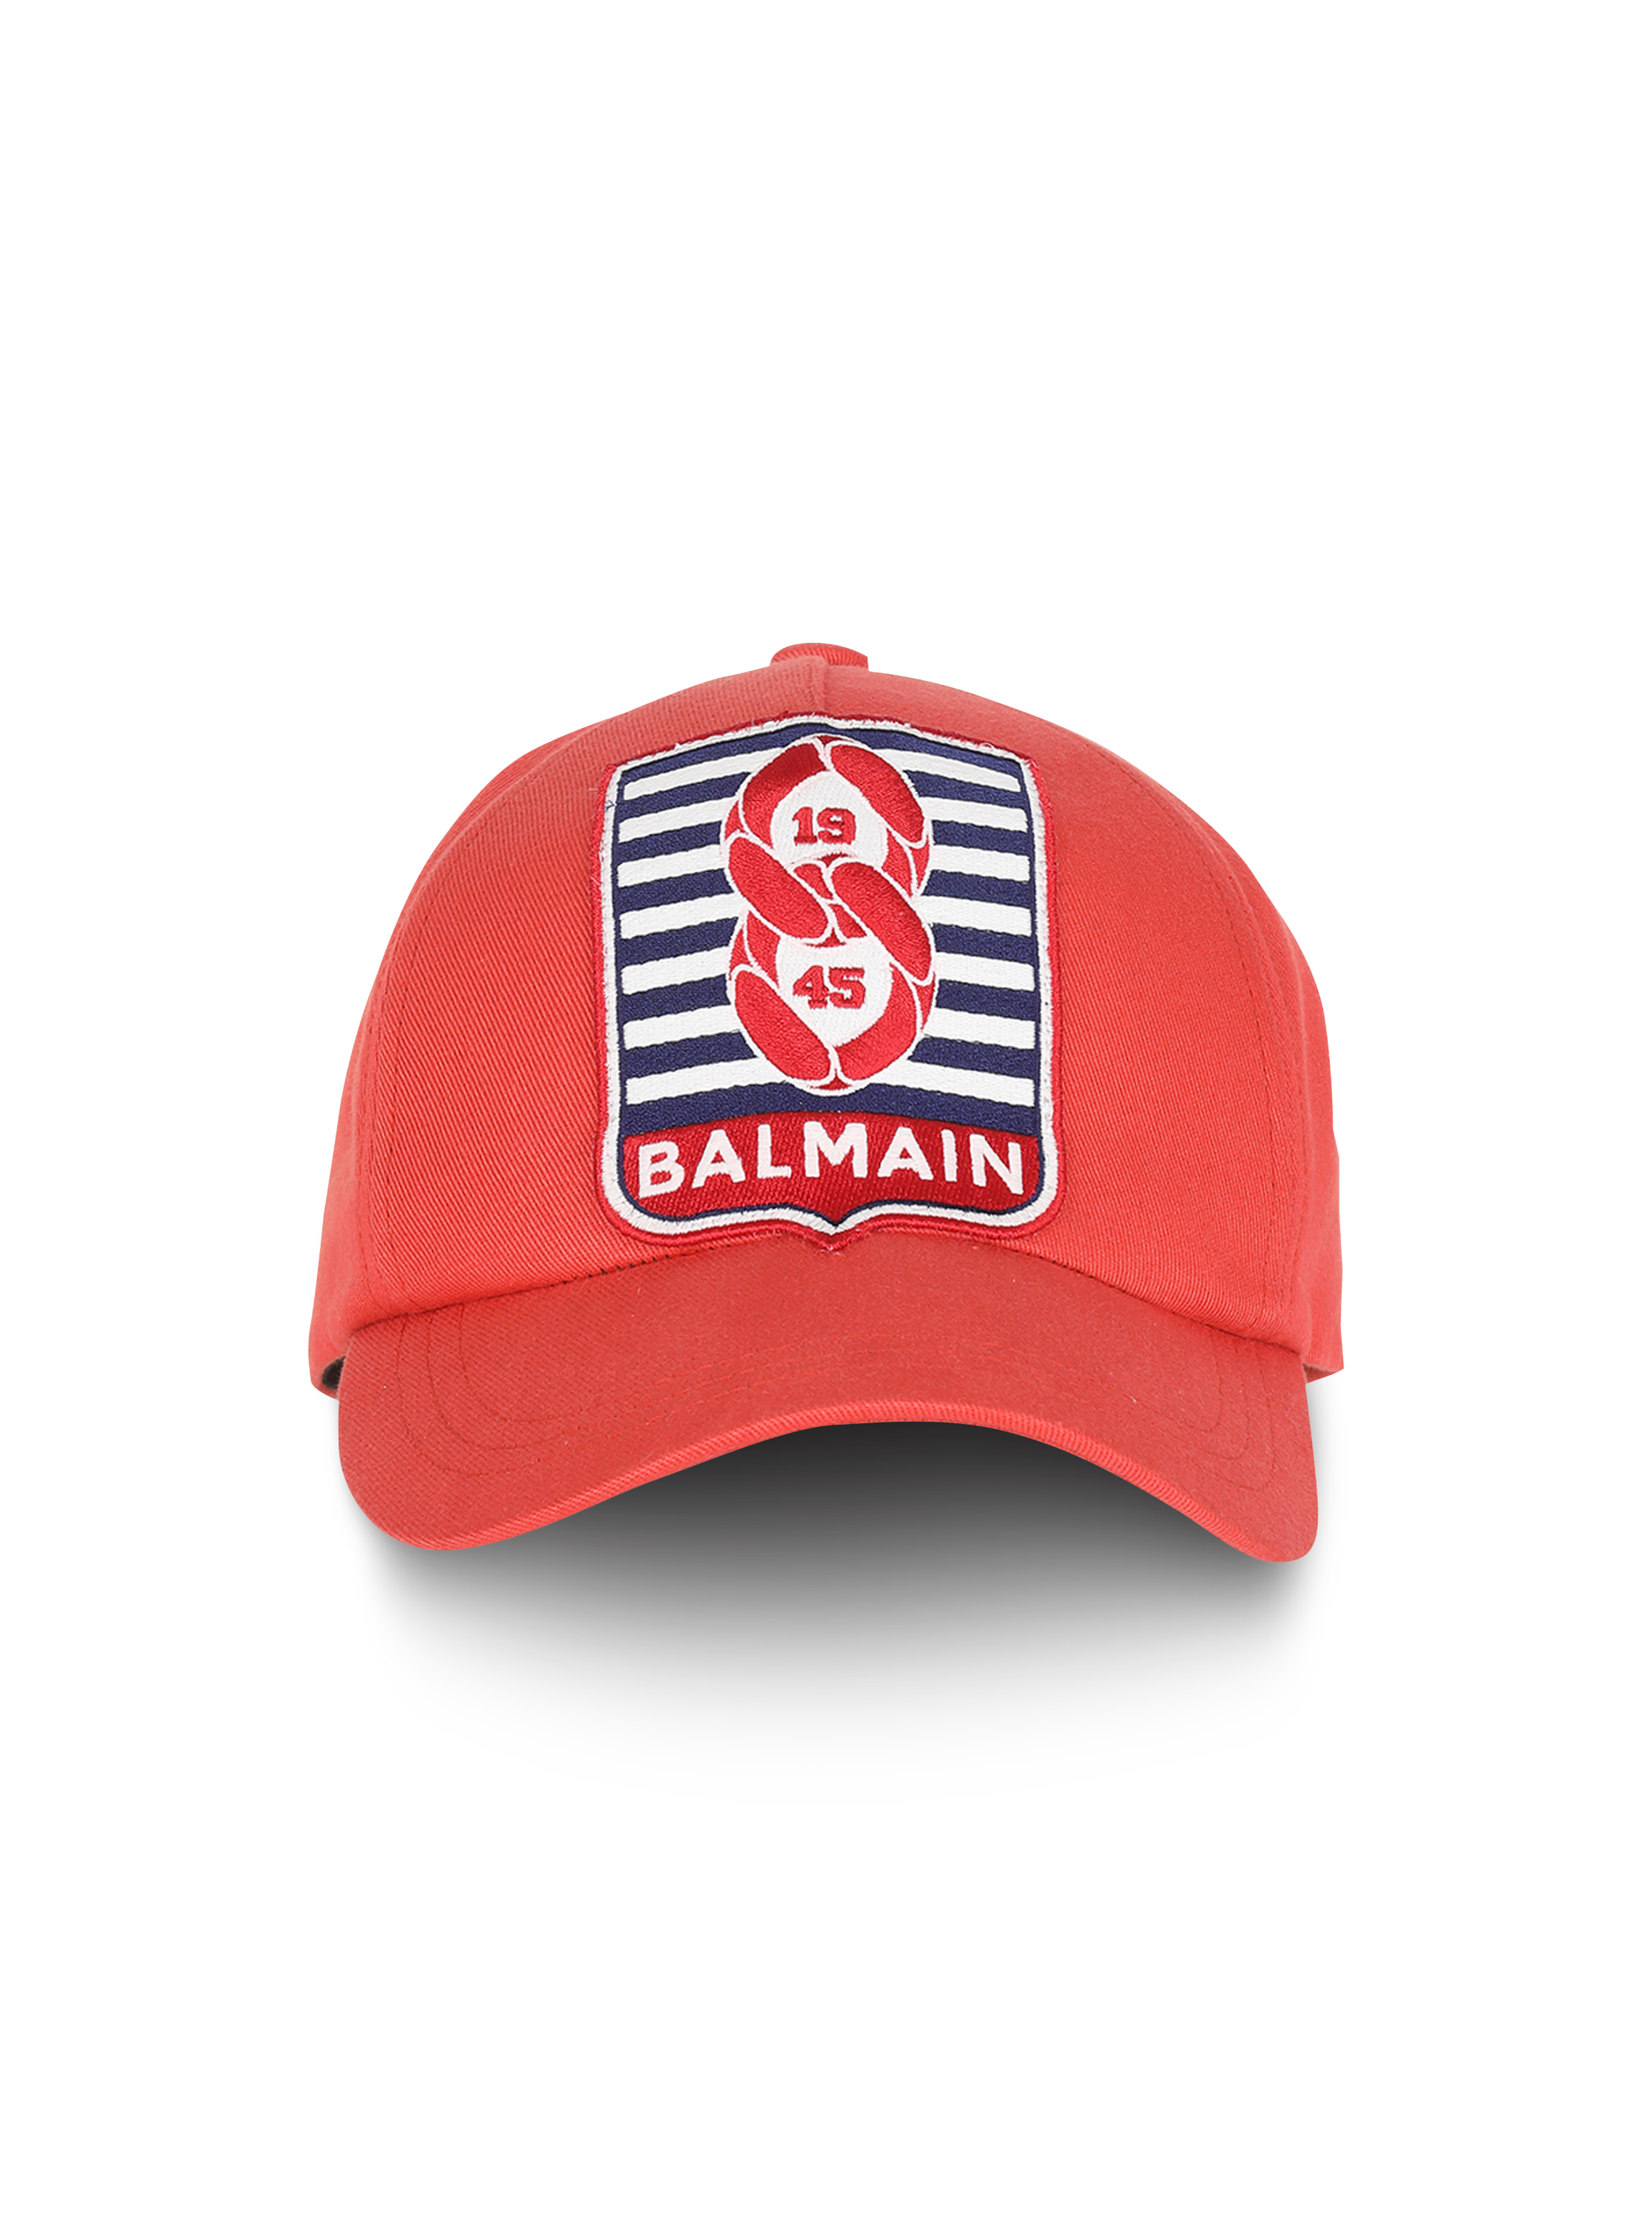 HIGH SUMMER CAPSULE - Cotton cap with Balmain monogram badge, red